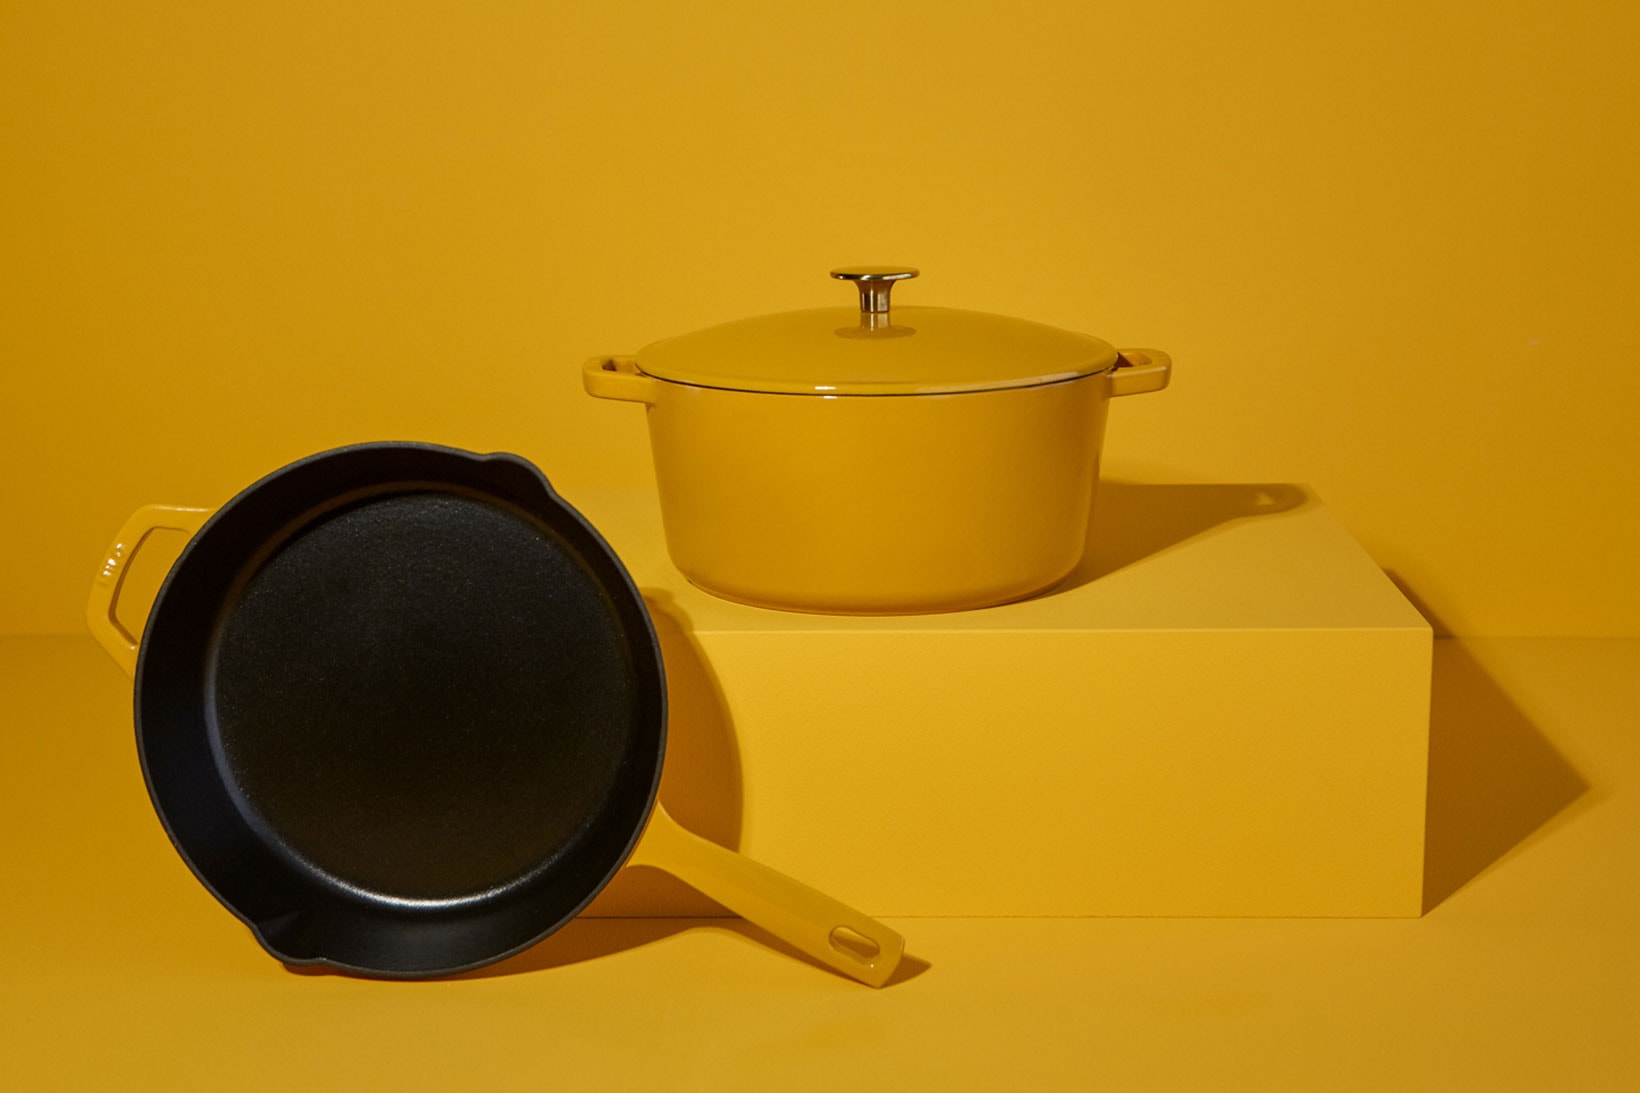 milo cookware kitchen cast iron pants pots new colorways mustard yellow